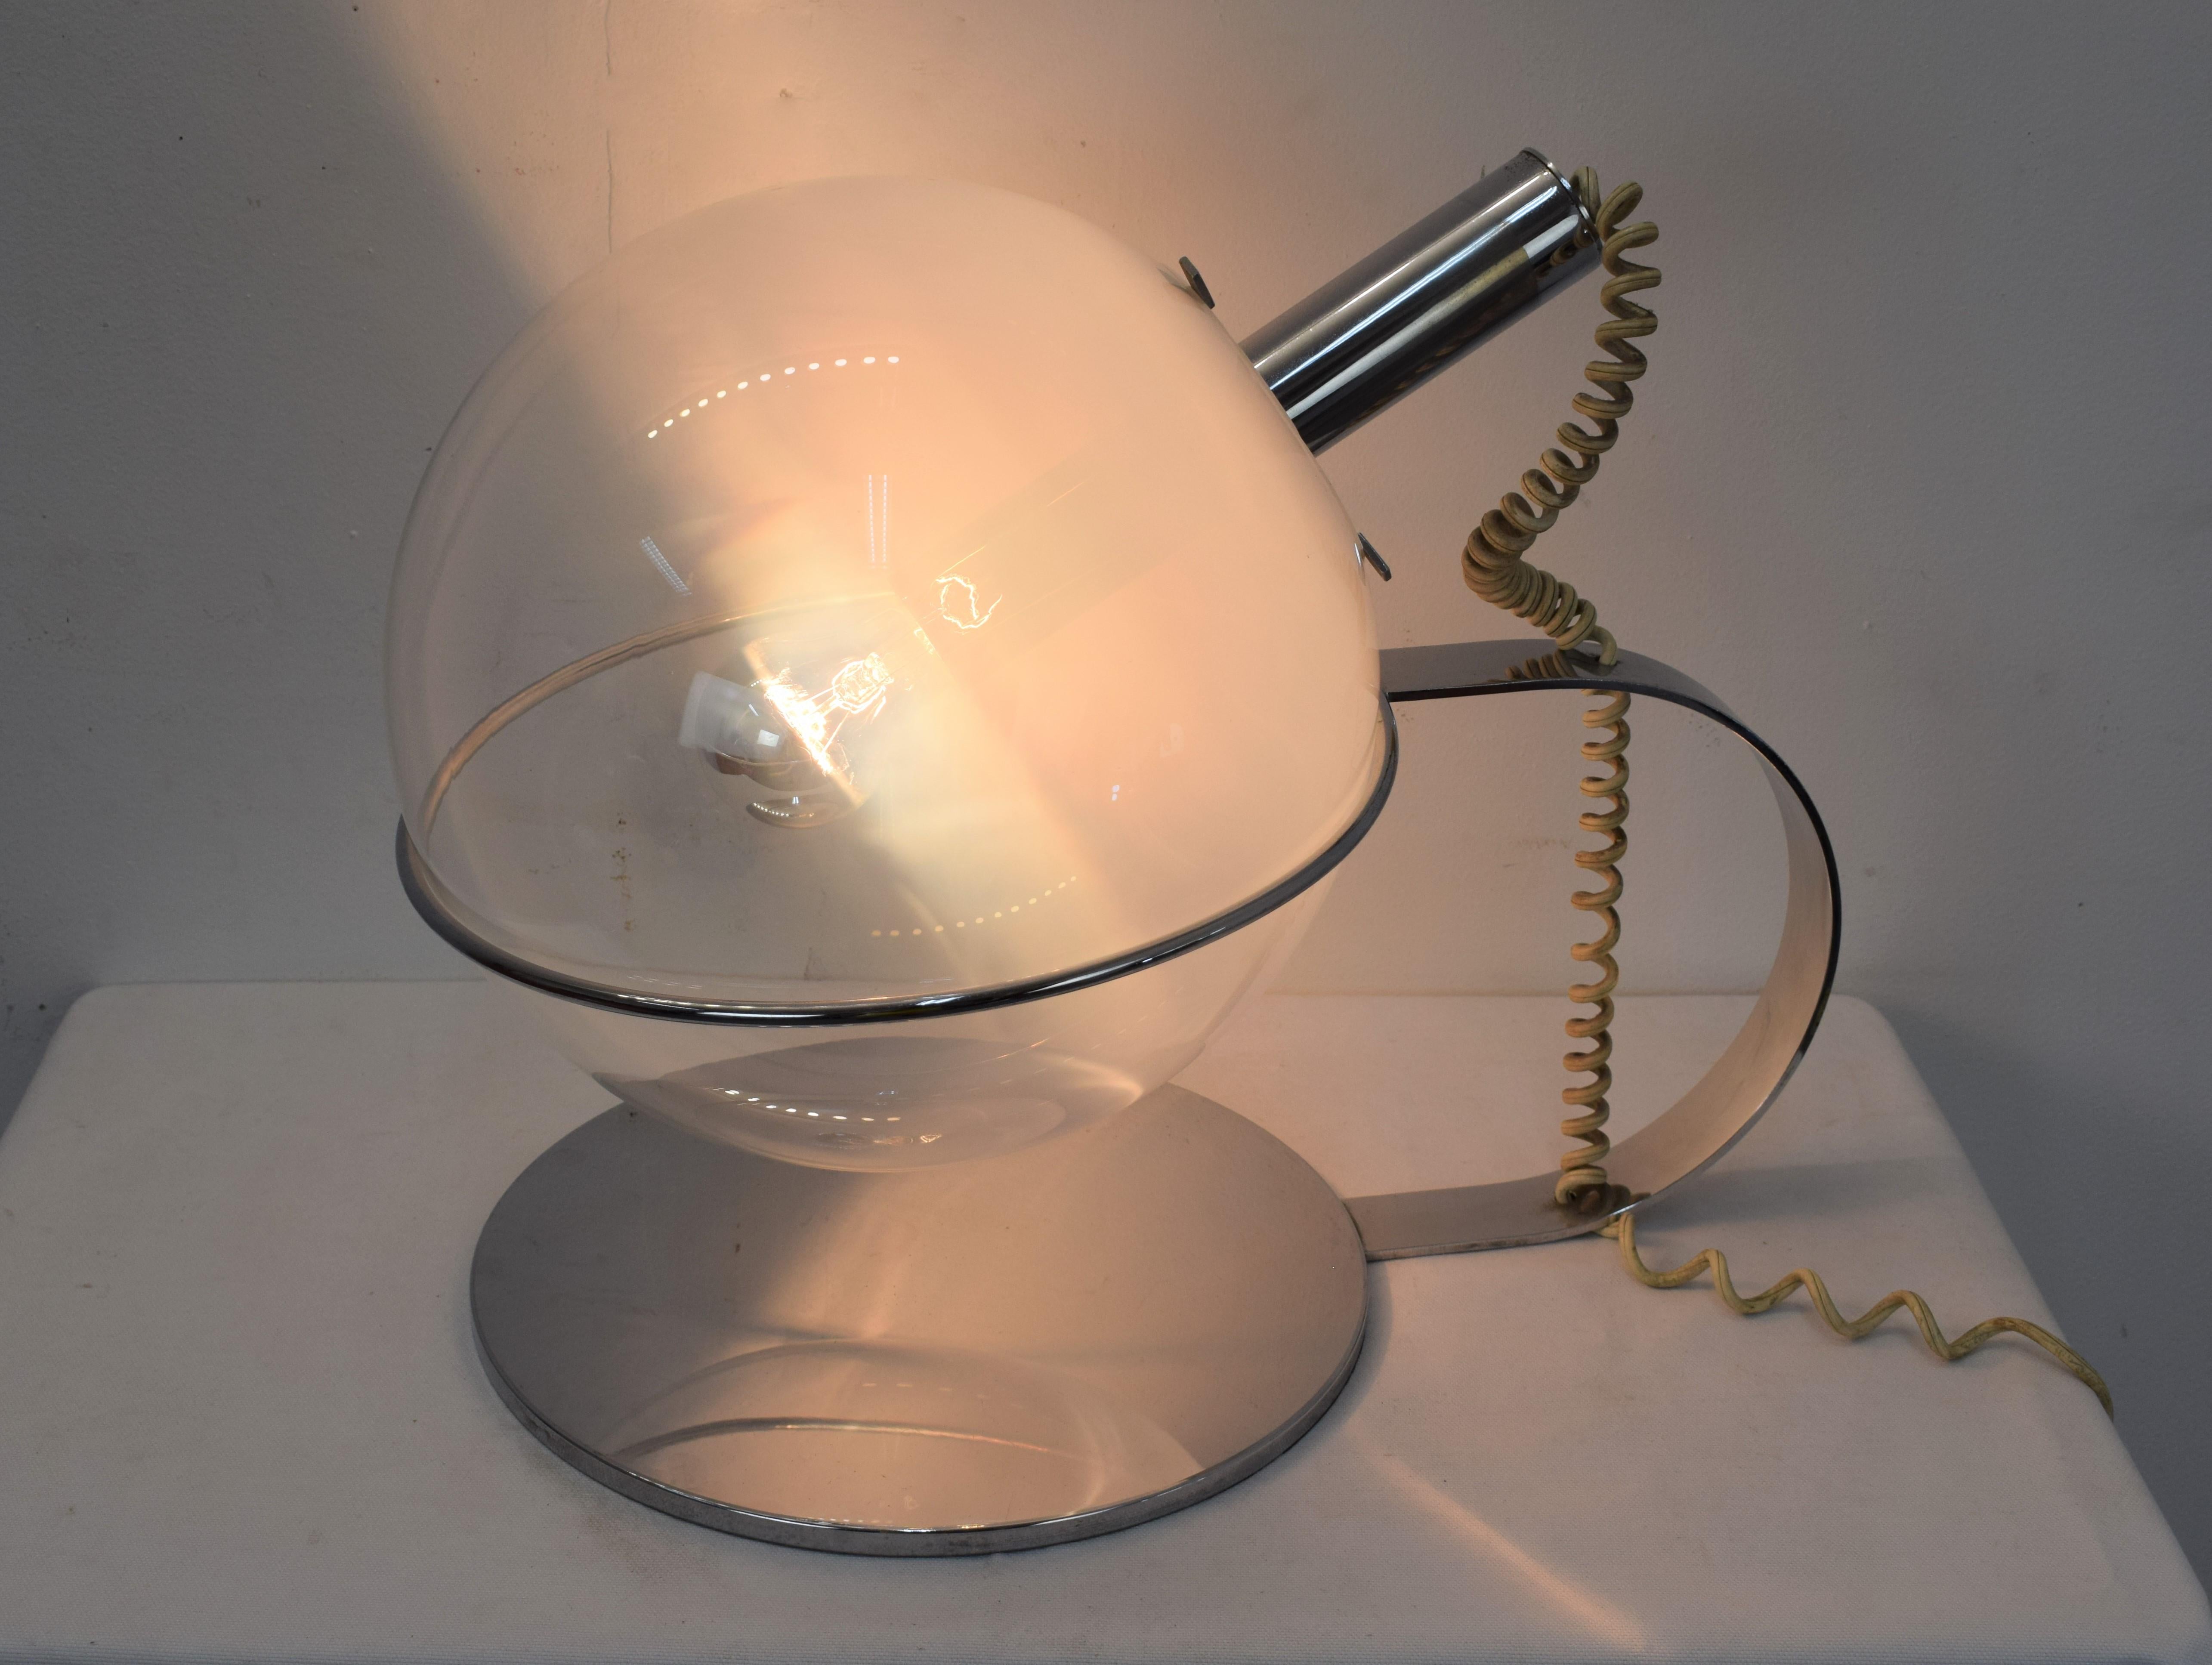 Italian table lamp, 1970s.
Dimensions: H=40 cm; W=50 cm; D= 30 cm.